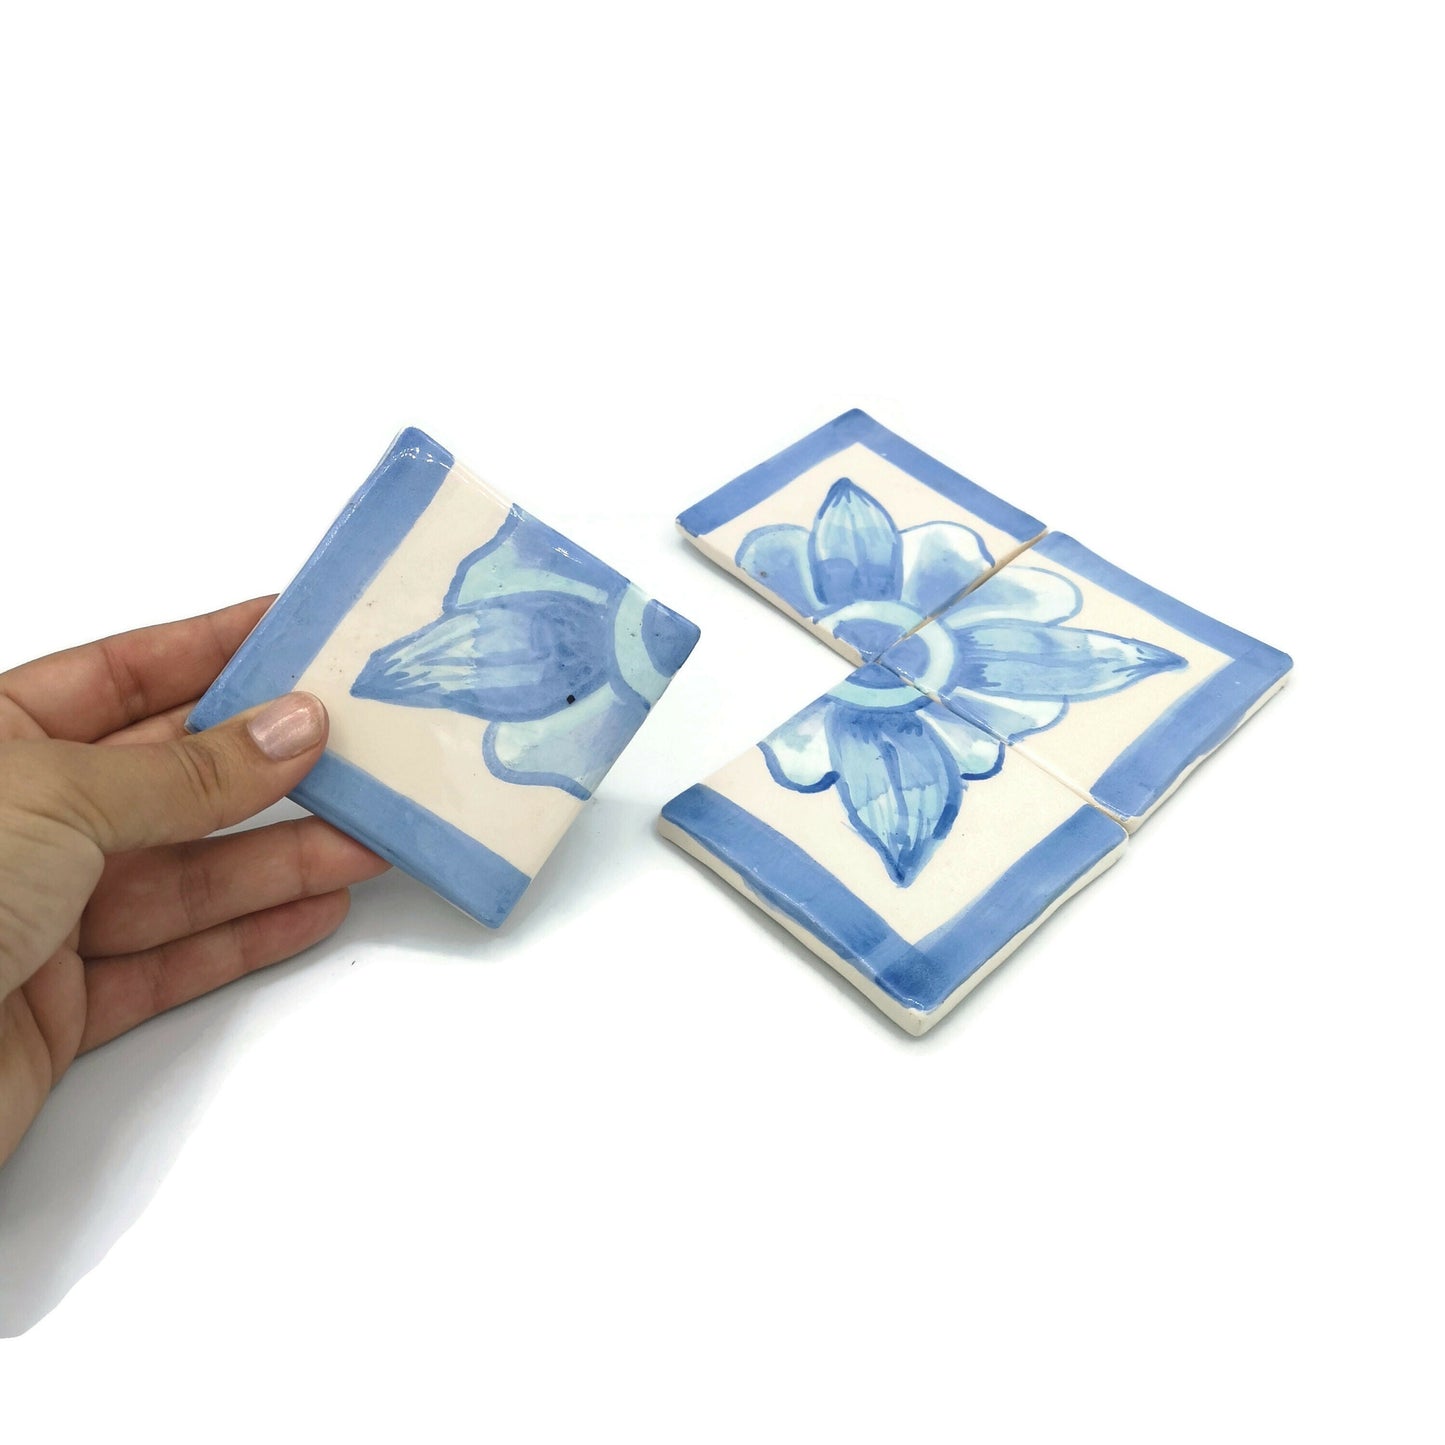 15cm/5.9in Handmade Ceramic Blue And White Tile Panel With Hand Painted Floral Motif, Square Mosaic Panel Kitchen Backsplash Portuguese Tile - Ceramica Ana Rafael